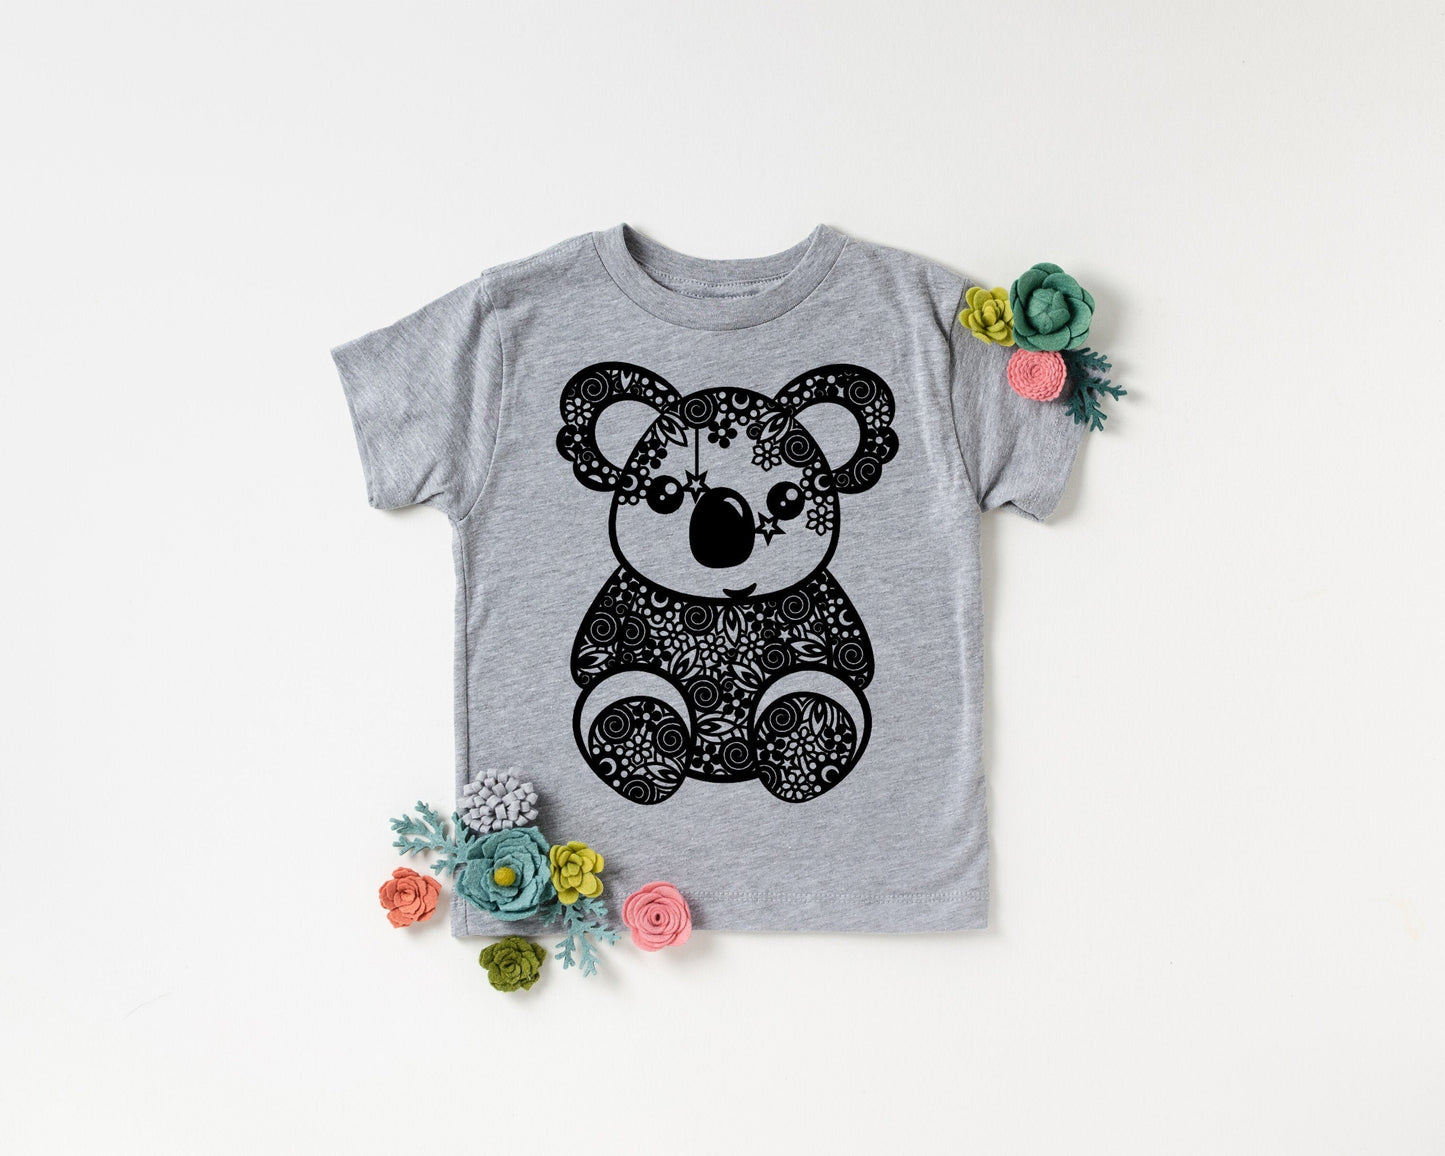 Koala Patterned Toddler or Youth Shirt - Cute Toddler Shirt - Toddler Girl Shirt - Animal Shirt - Koala Bear - Baby Shirt - Koala Lover Tee